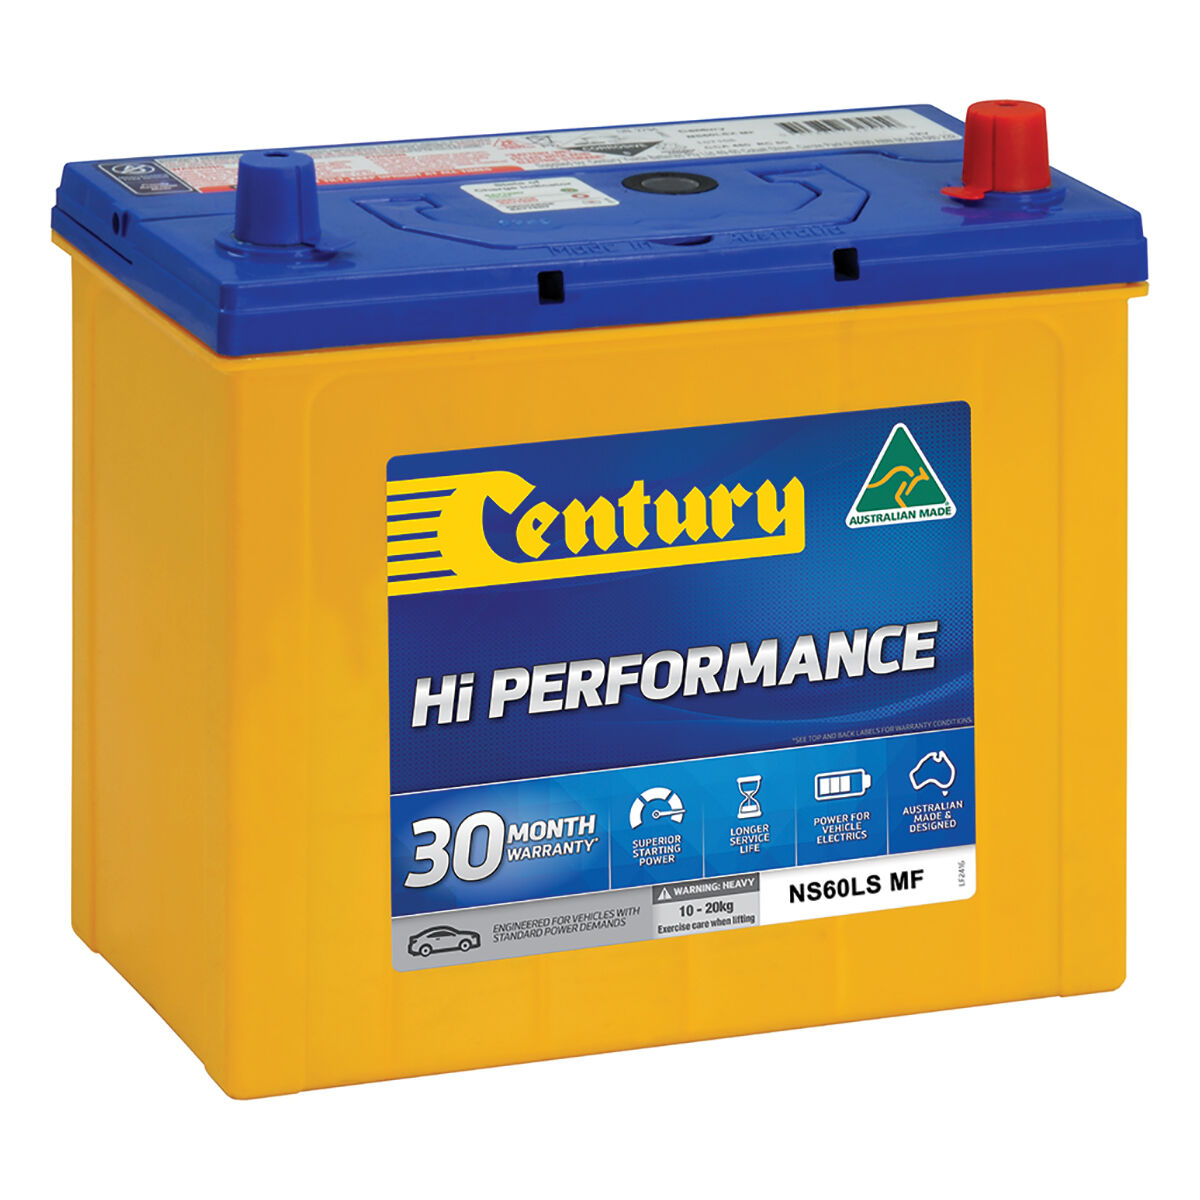 Century Hi Performance Car Battery NS60LS MF Supercheap Auto